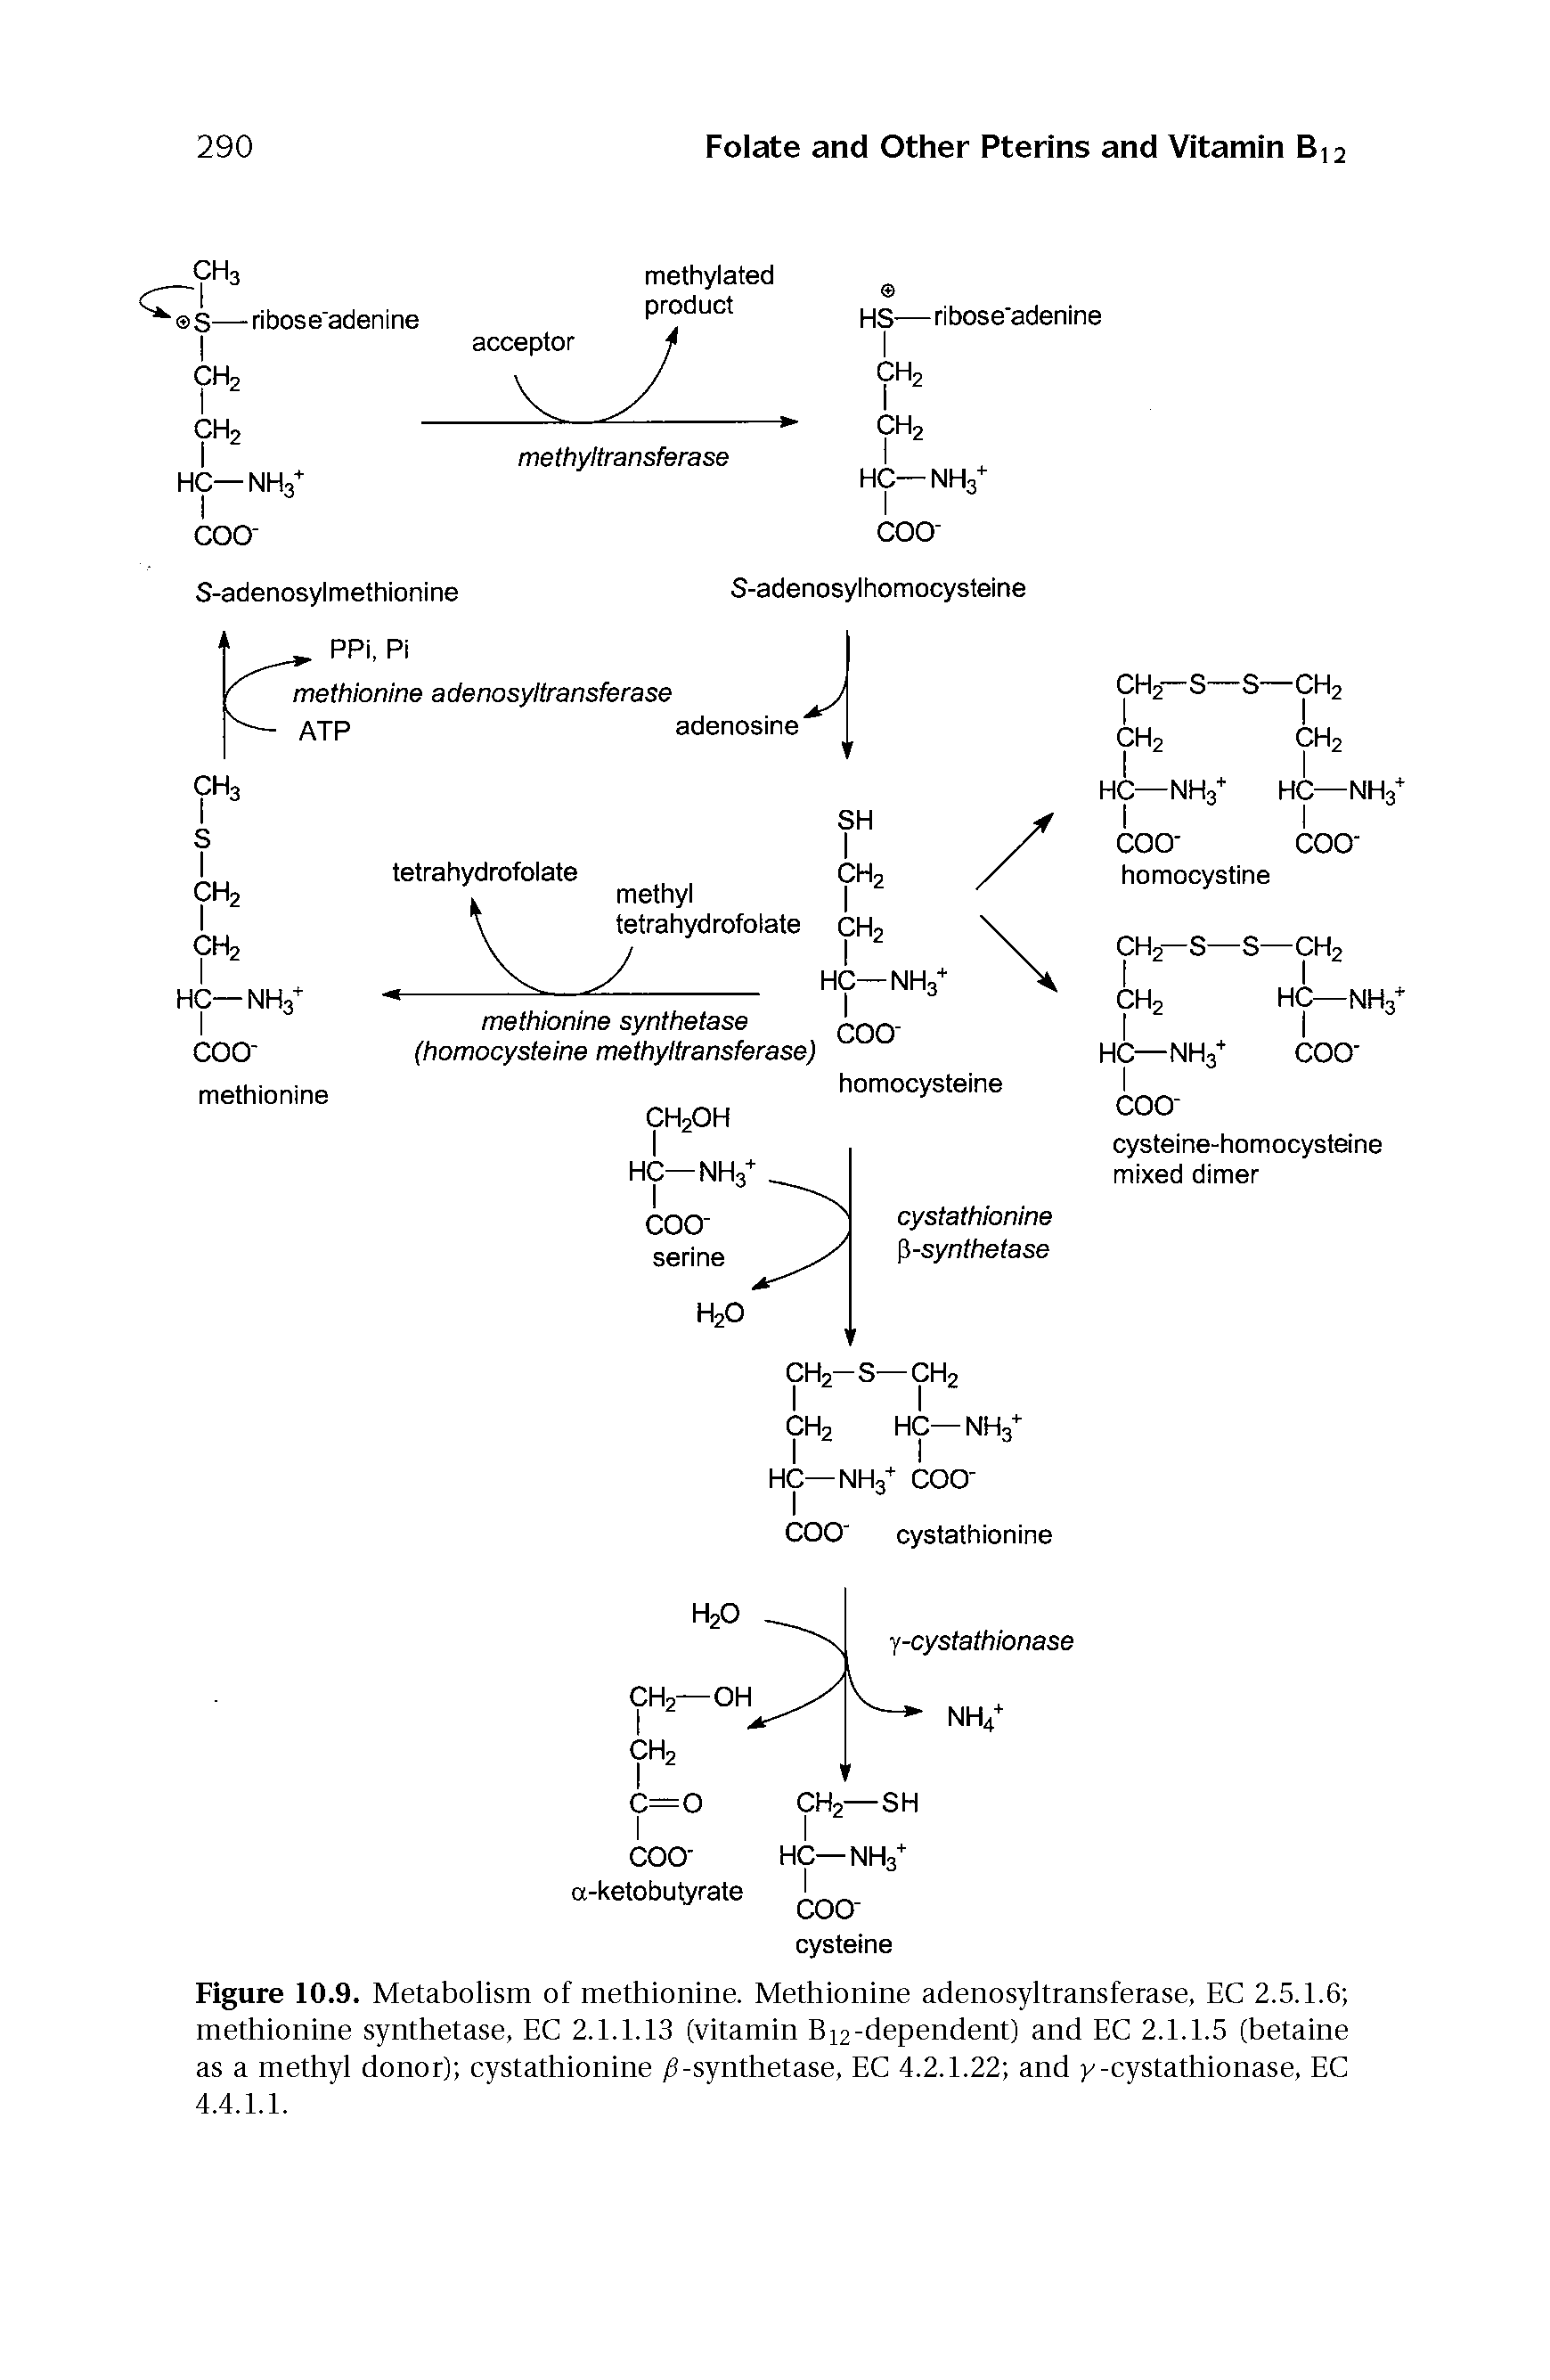 Figure 10.9. Metabolism of methionine. Methionine adenosyltransferase, EC 2.5.1.6 methionine synthetase, EC 2.1.1.13 (vitamin B12-dependent) and EC 2.1.1.5 (betaine as a methyl donor) cystathionine, 6-synthetase, EC 4.2.1.22 and y-cystathionase, EC 4.4.I.I.